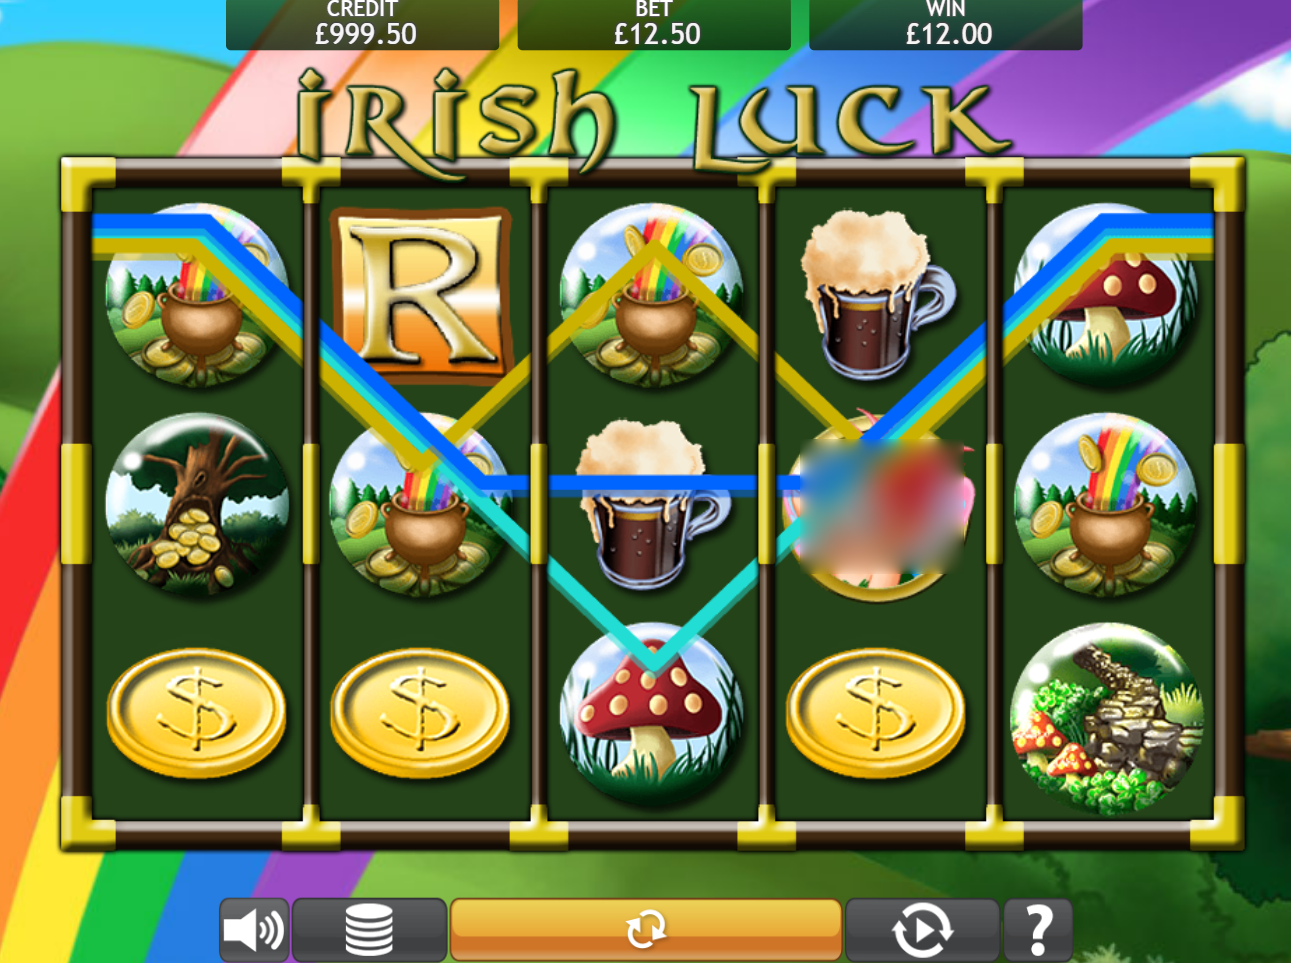 Irish Luck Slot free spins